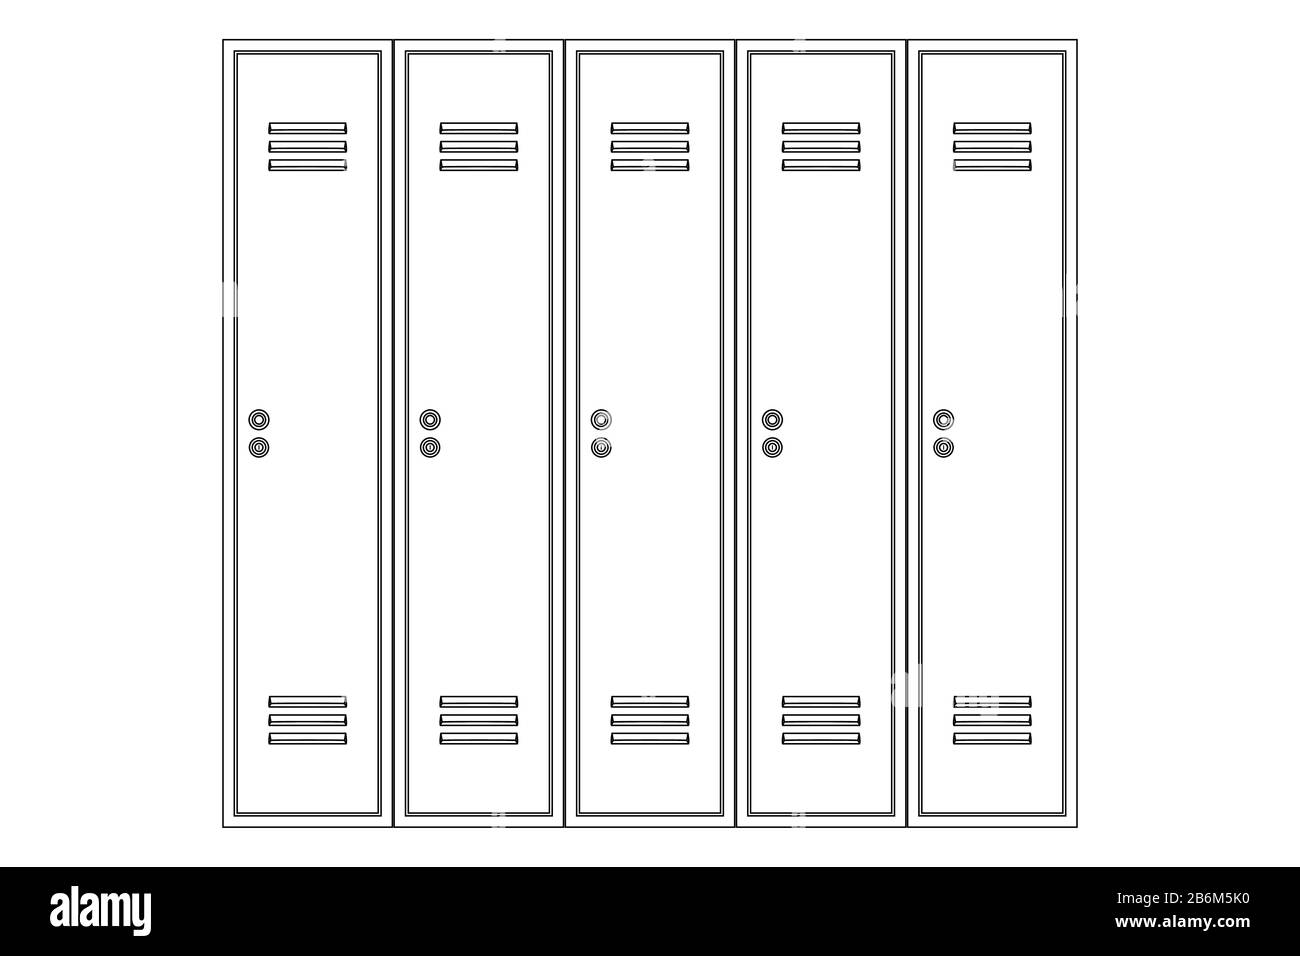 locker clipart black and white